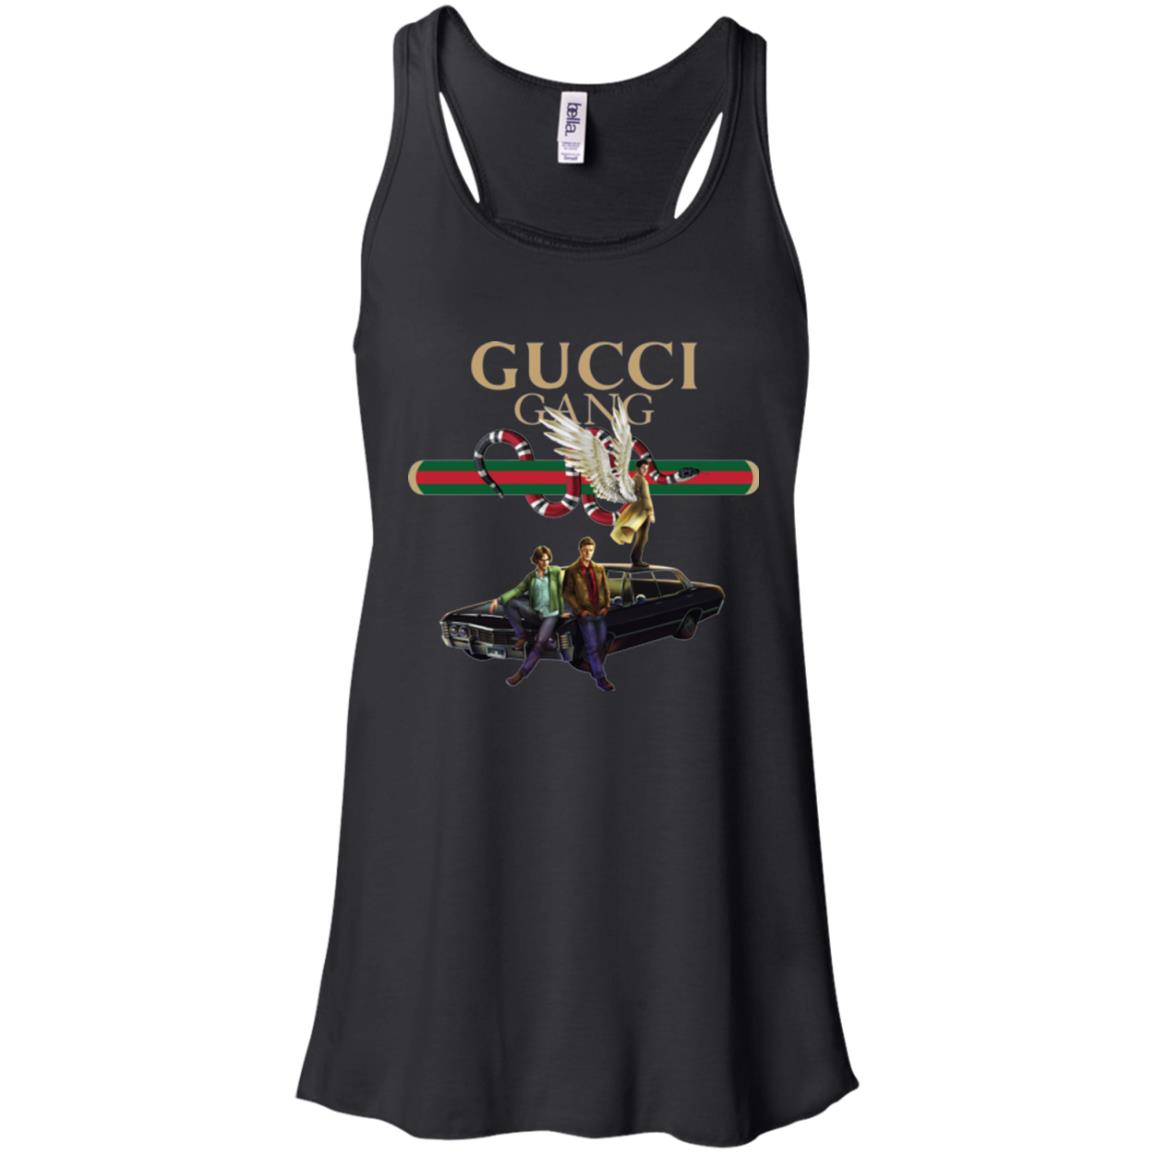 Gucci T Shirt Girl Gang The Art Of Mike Mignola